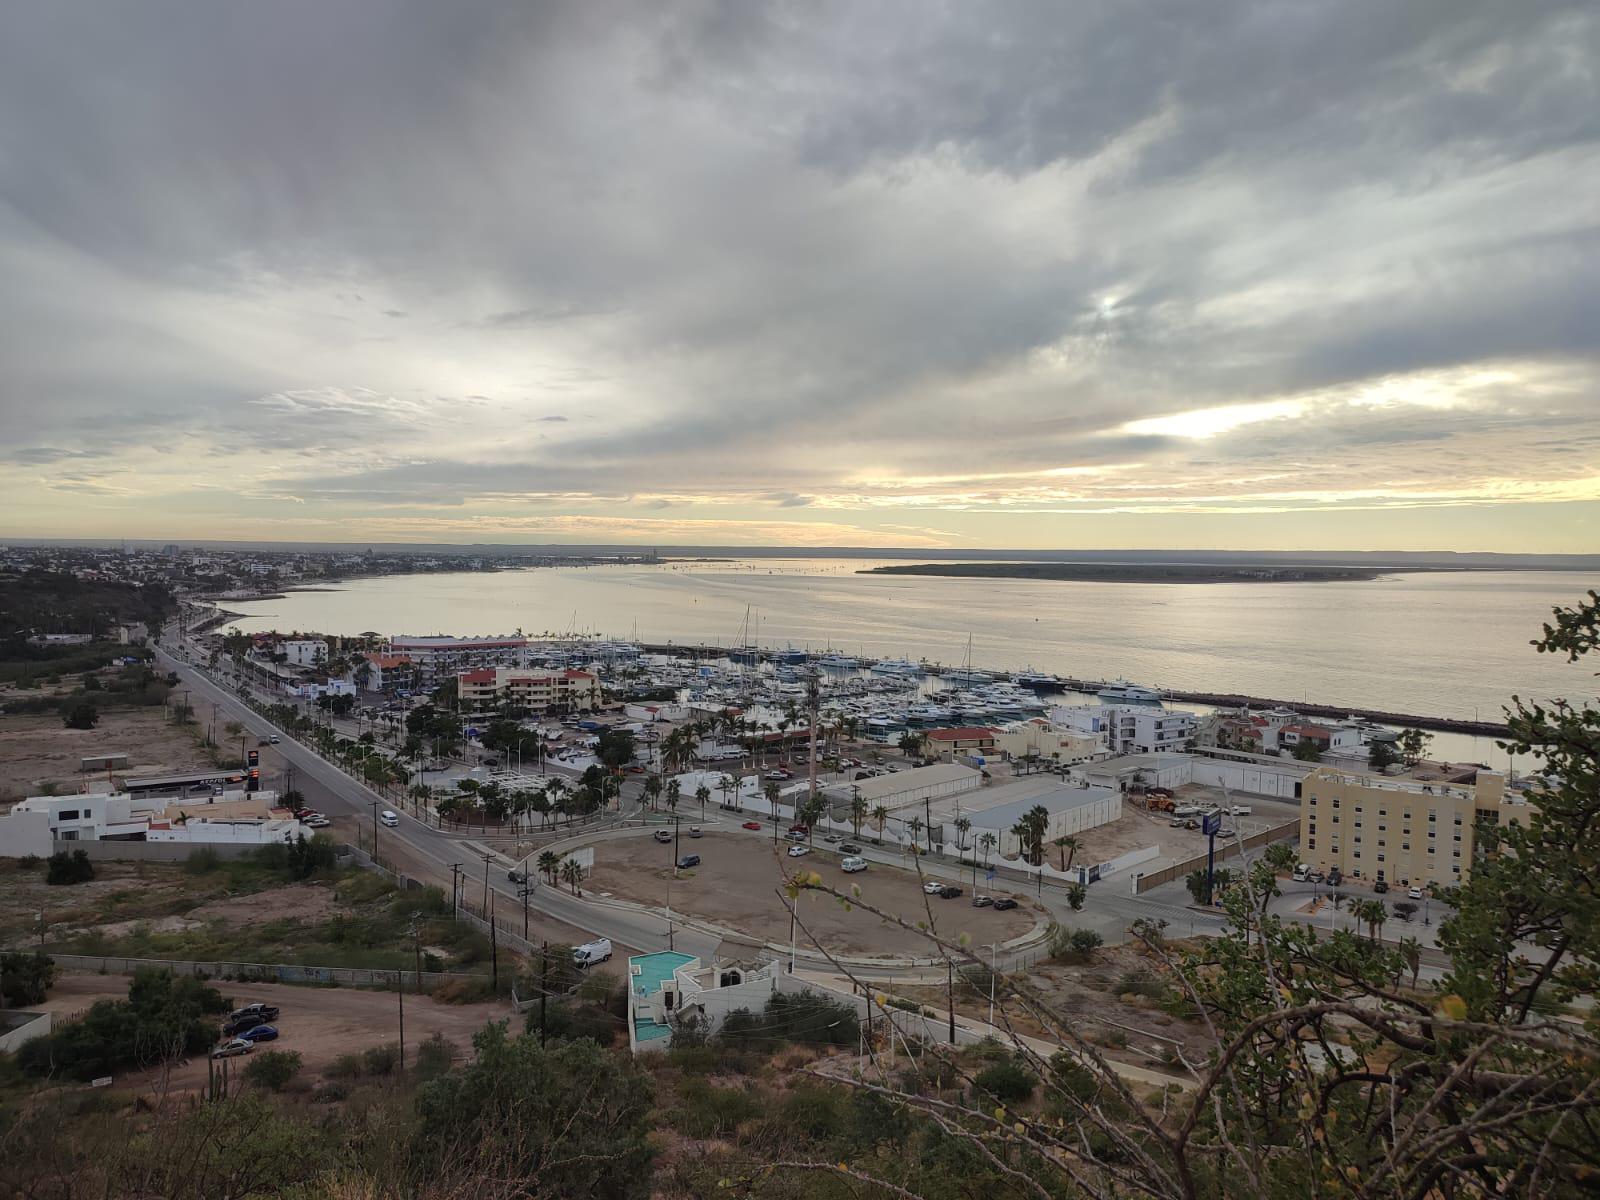 $!Foto ilustrativa de la bahía de La Paz, Baja California Sur.